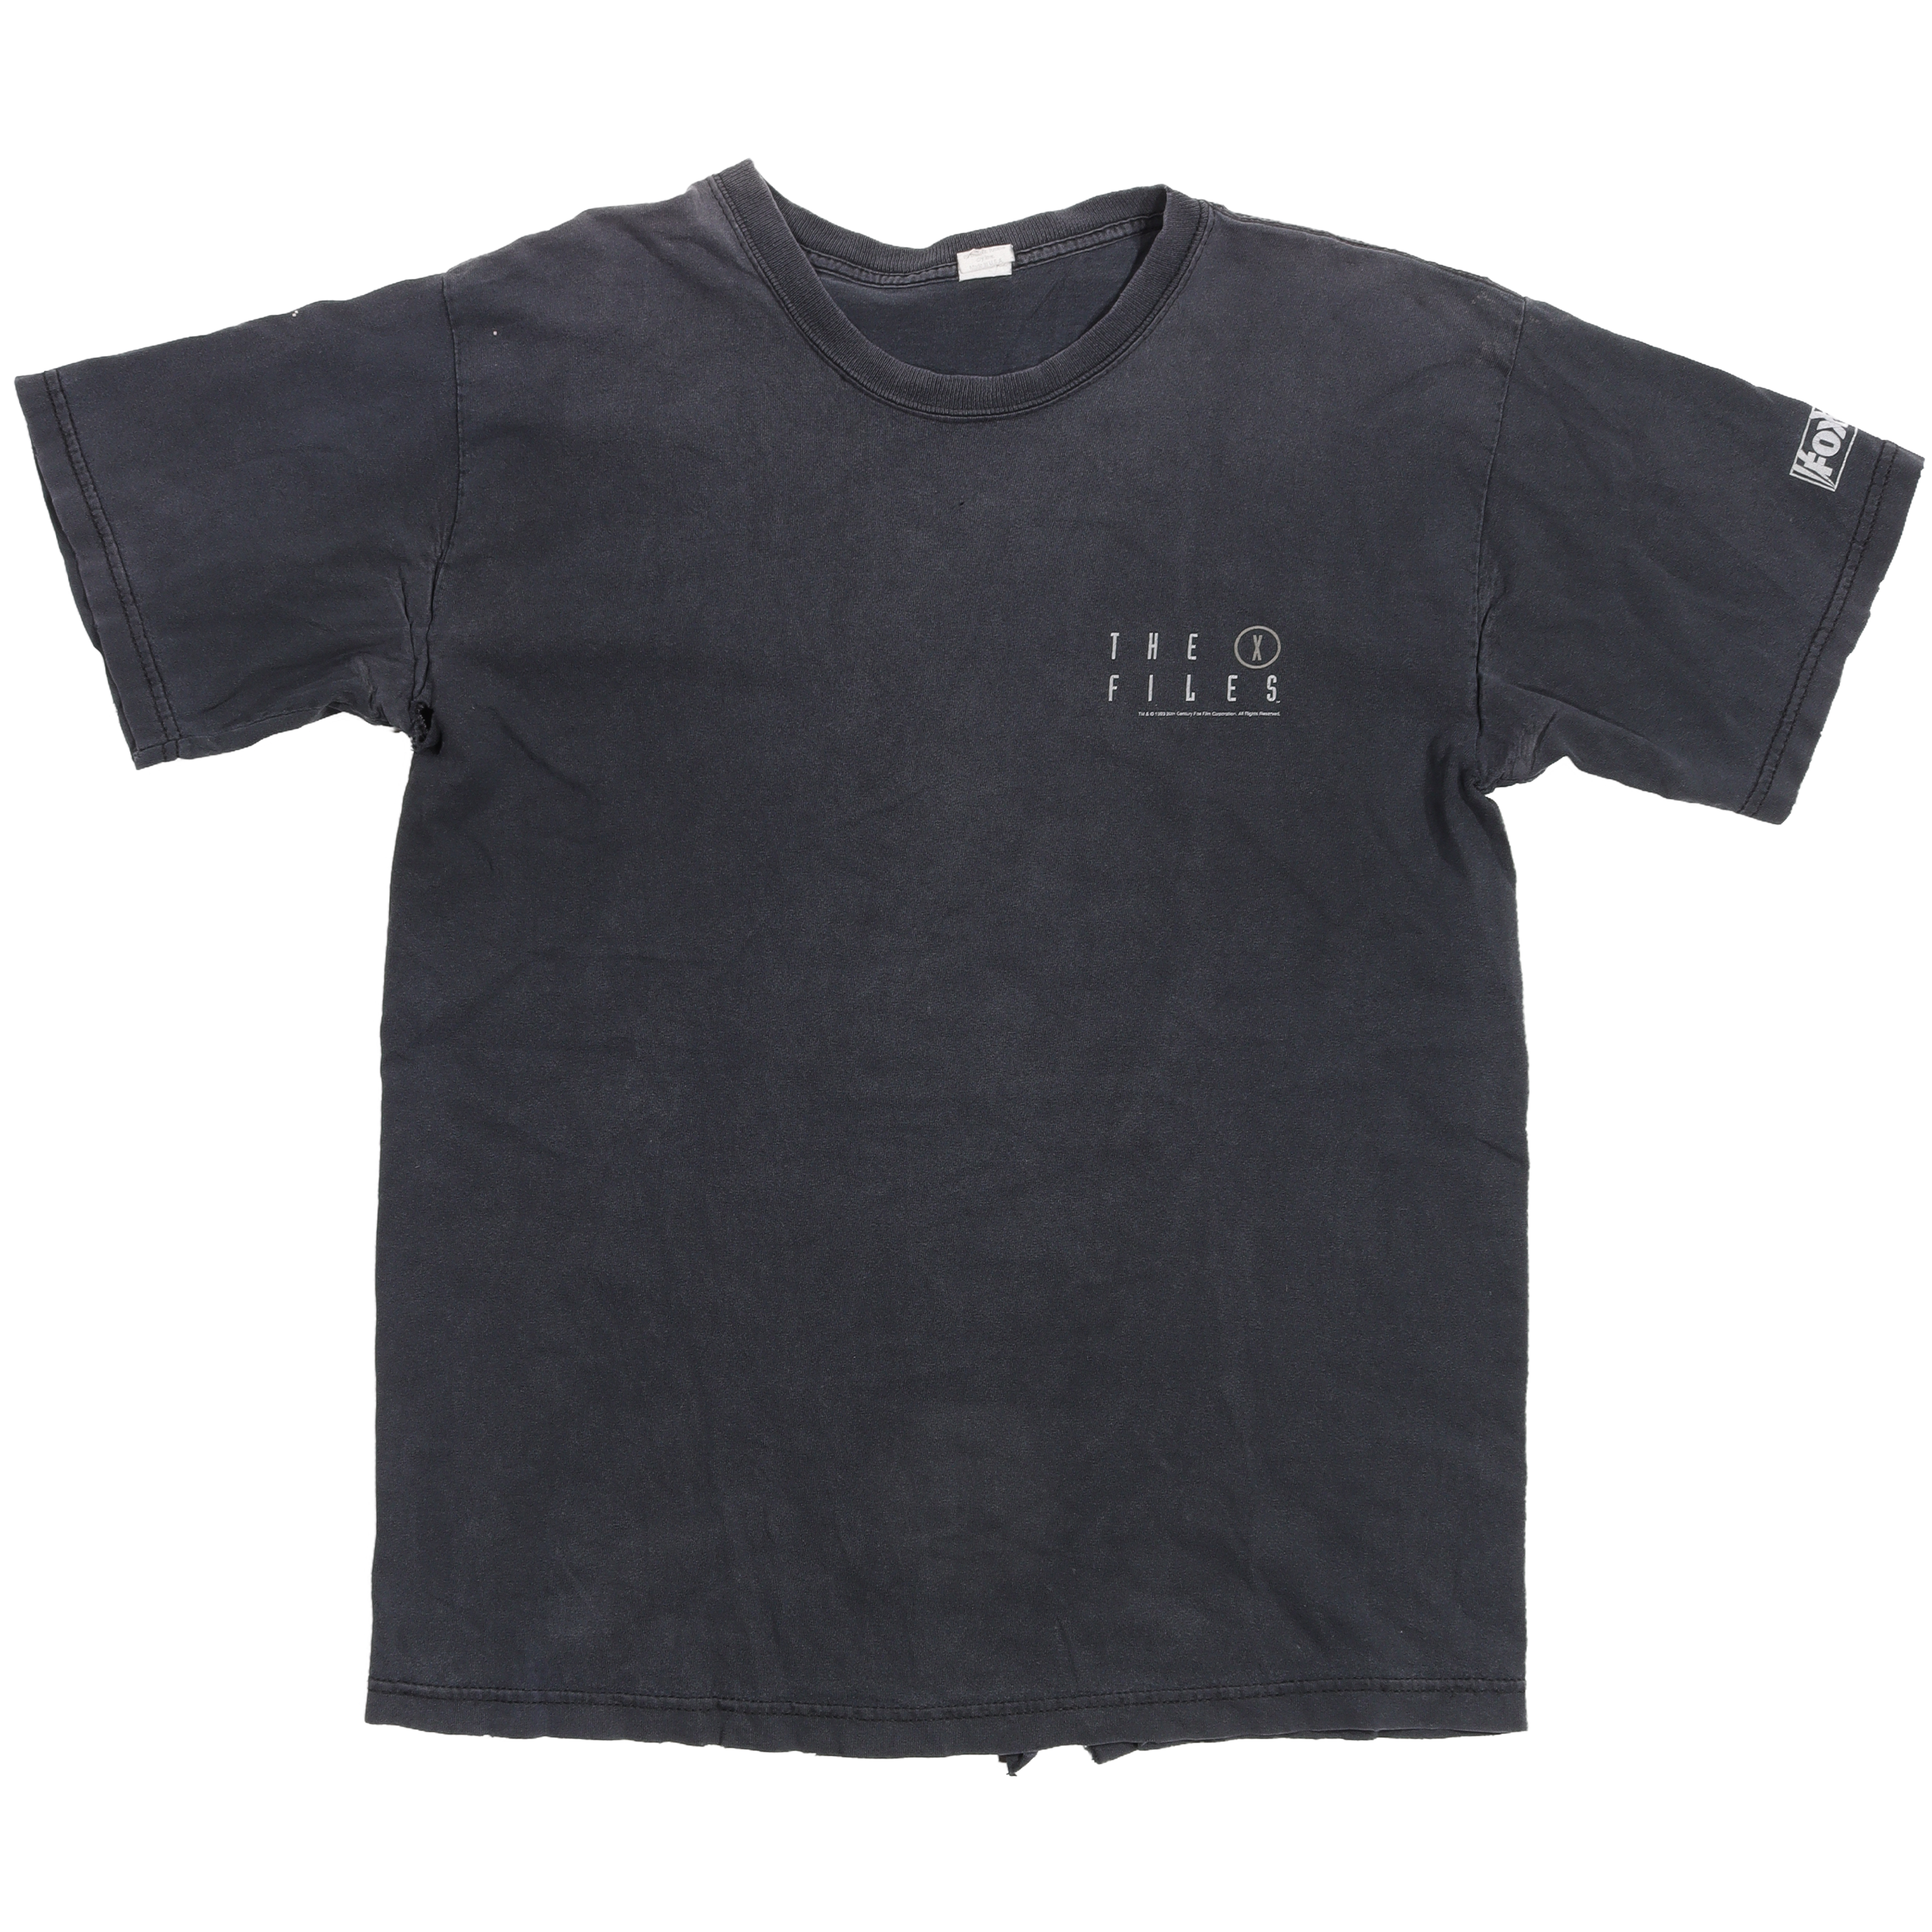 X-Files Logo T-Shirt